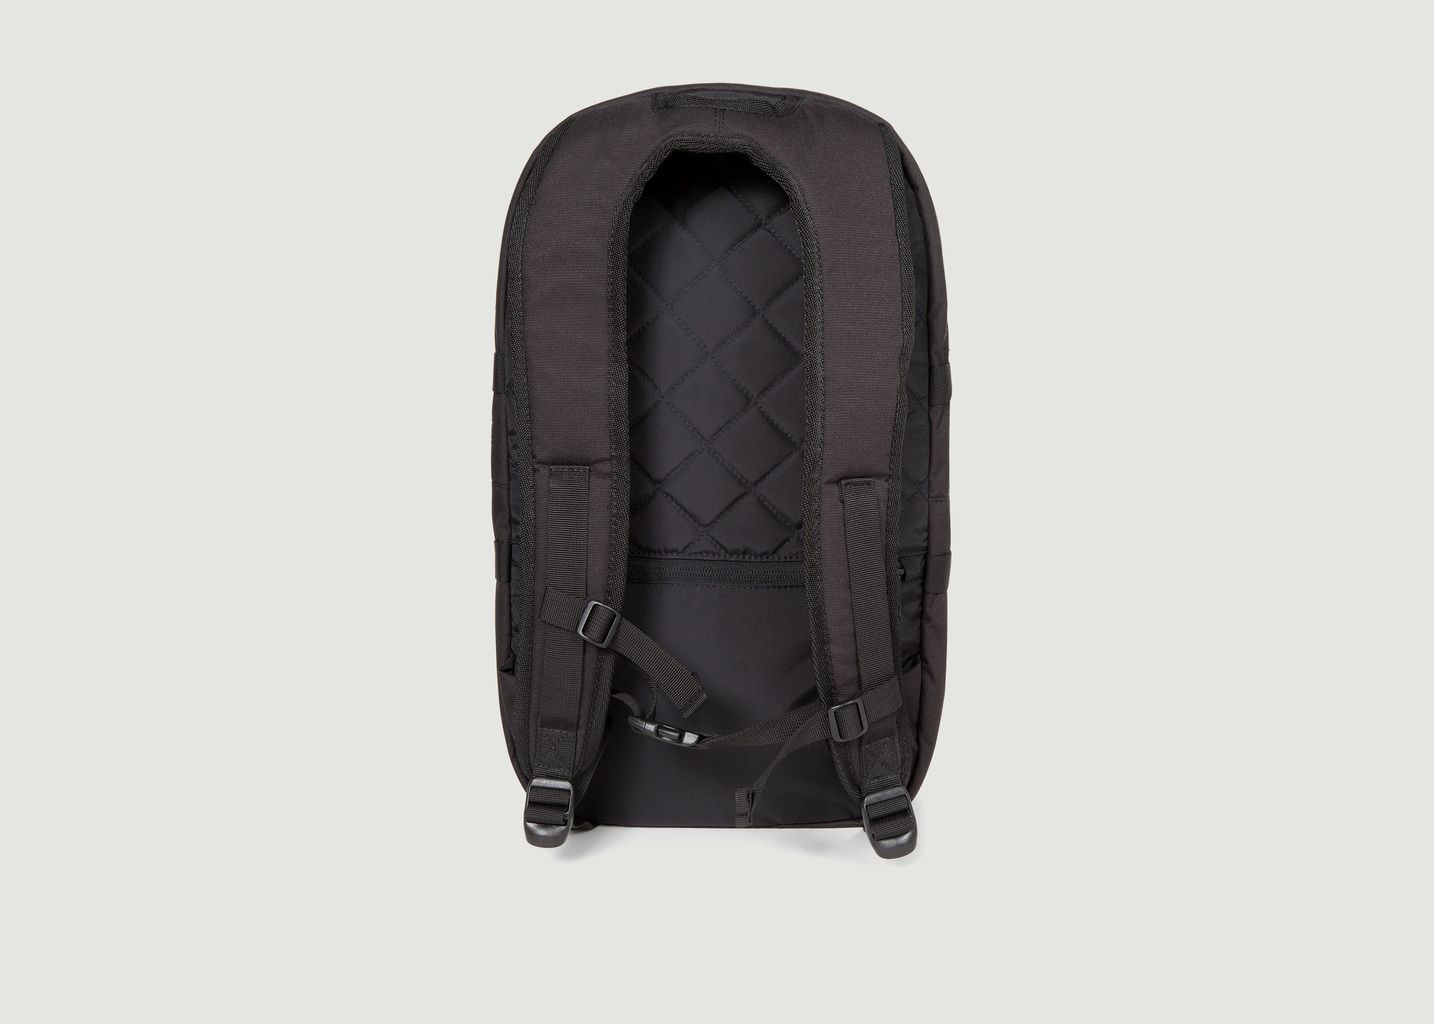 Backpack Floid - Eastpak